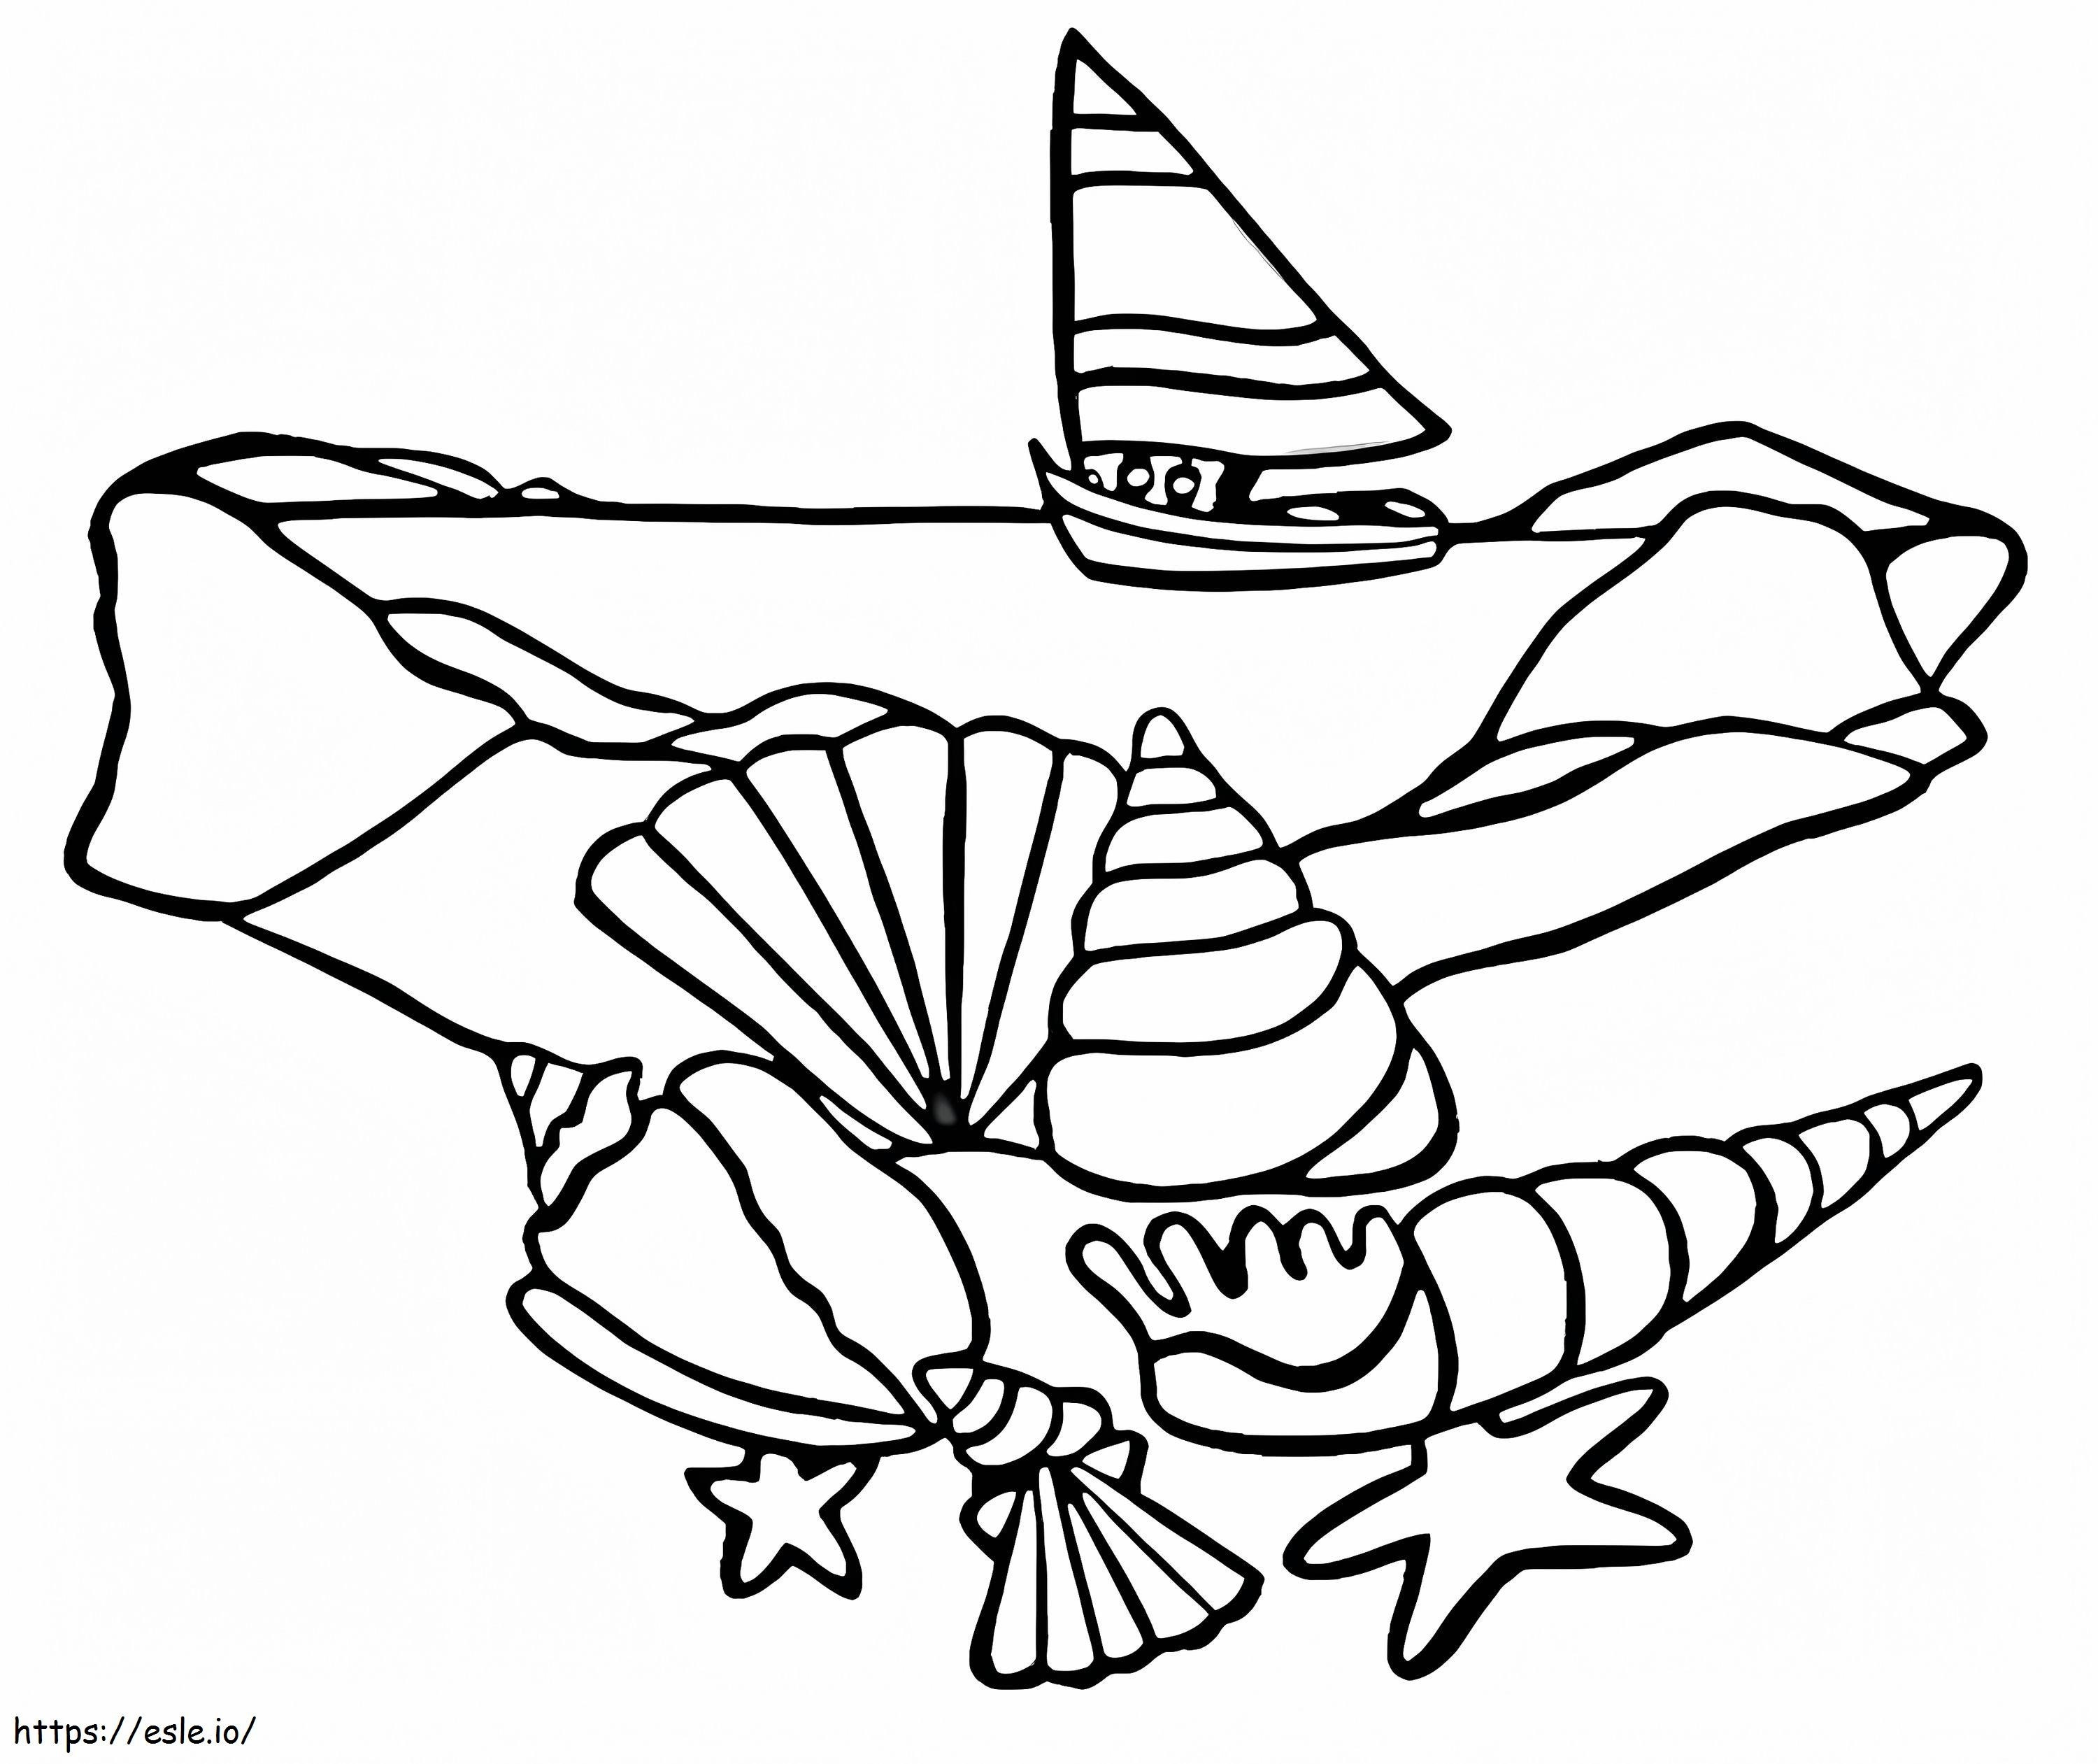 Boat And Seashells coloring page